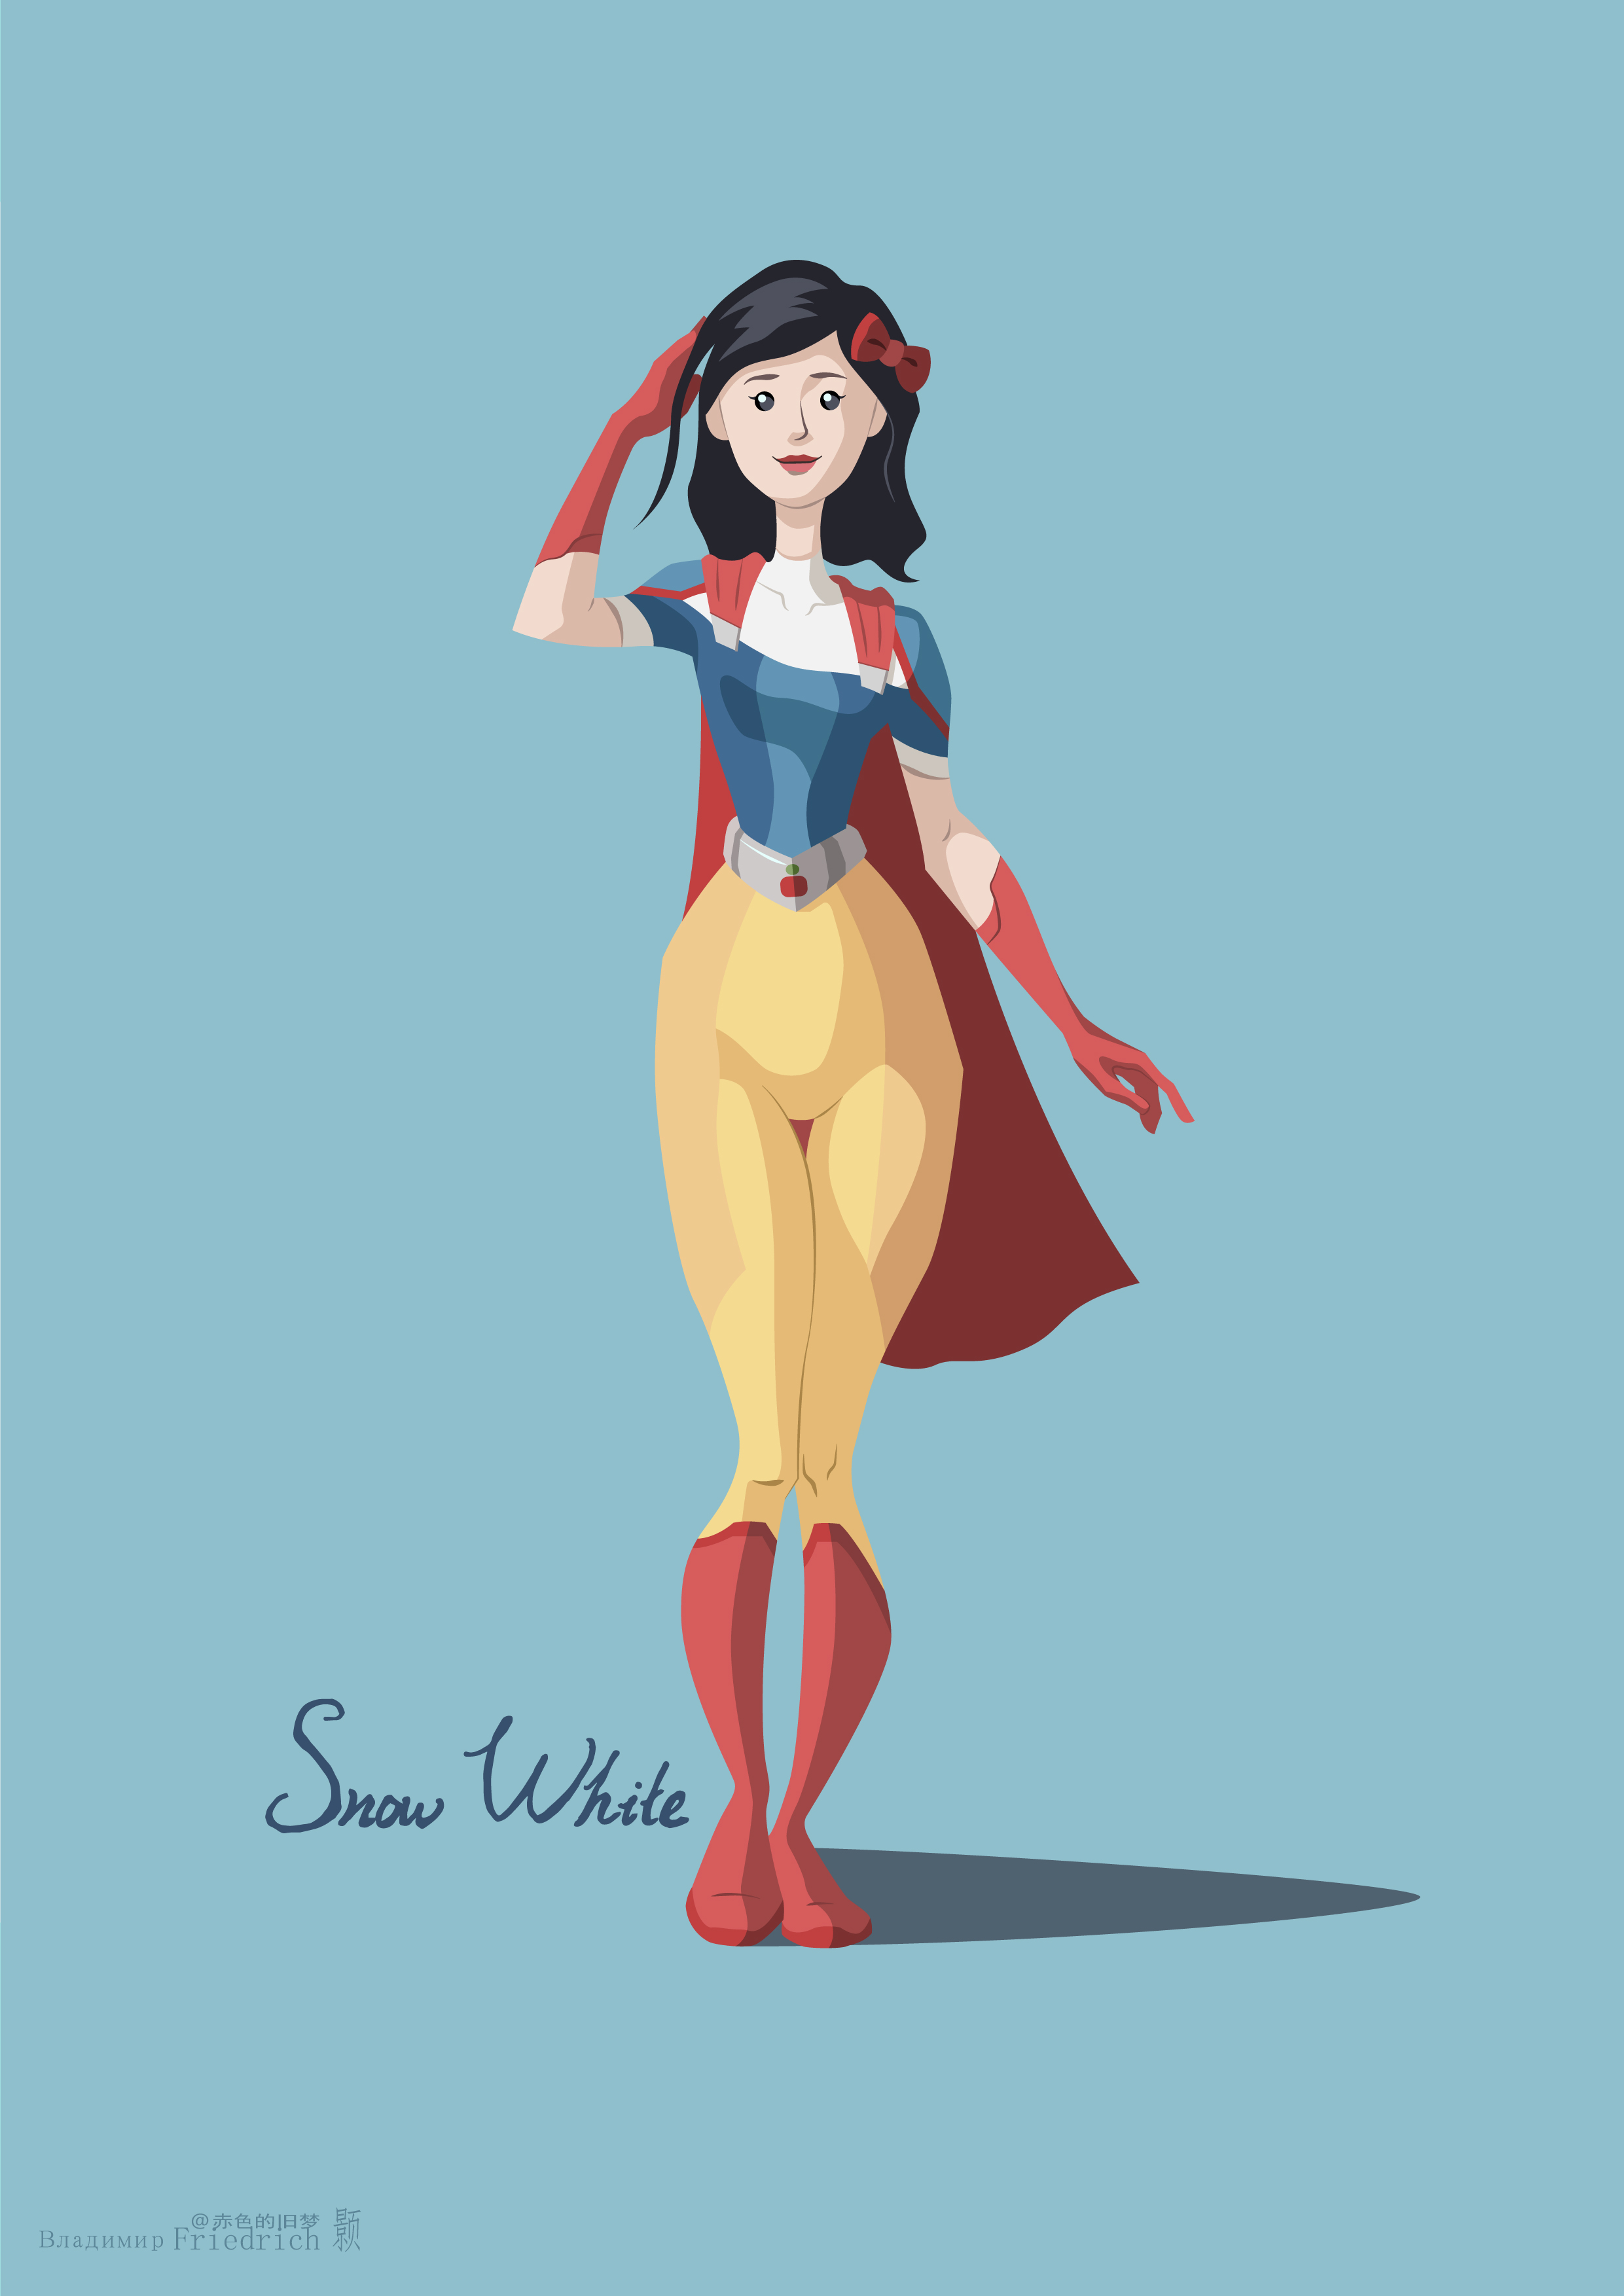 Illustration Flatdesign Disney Princesses Snow White Superheroines Superhero Simple Background Minim 2481x3508